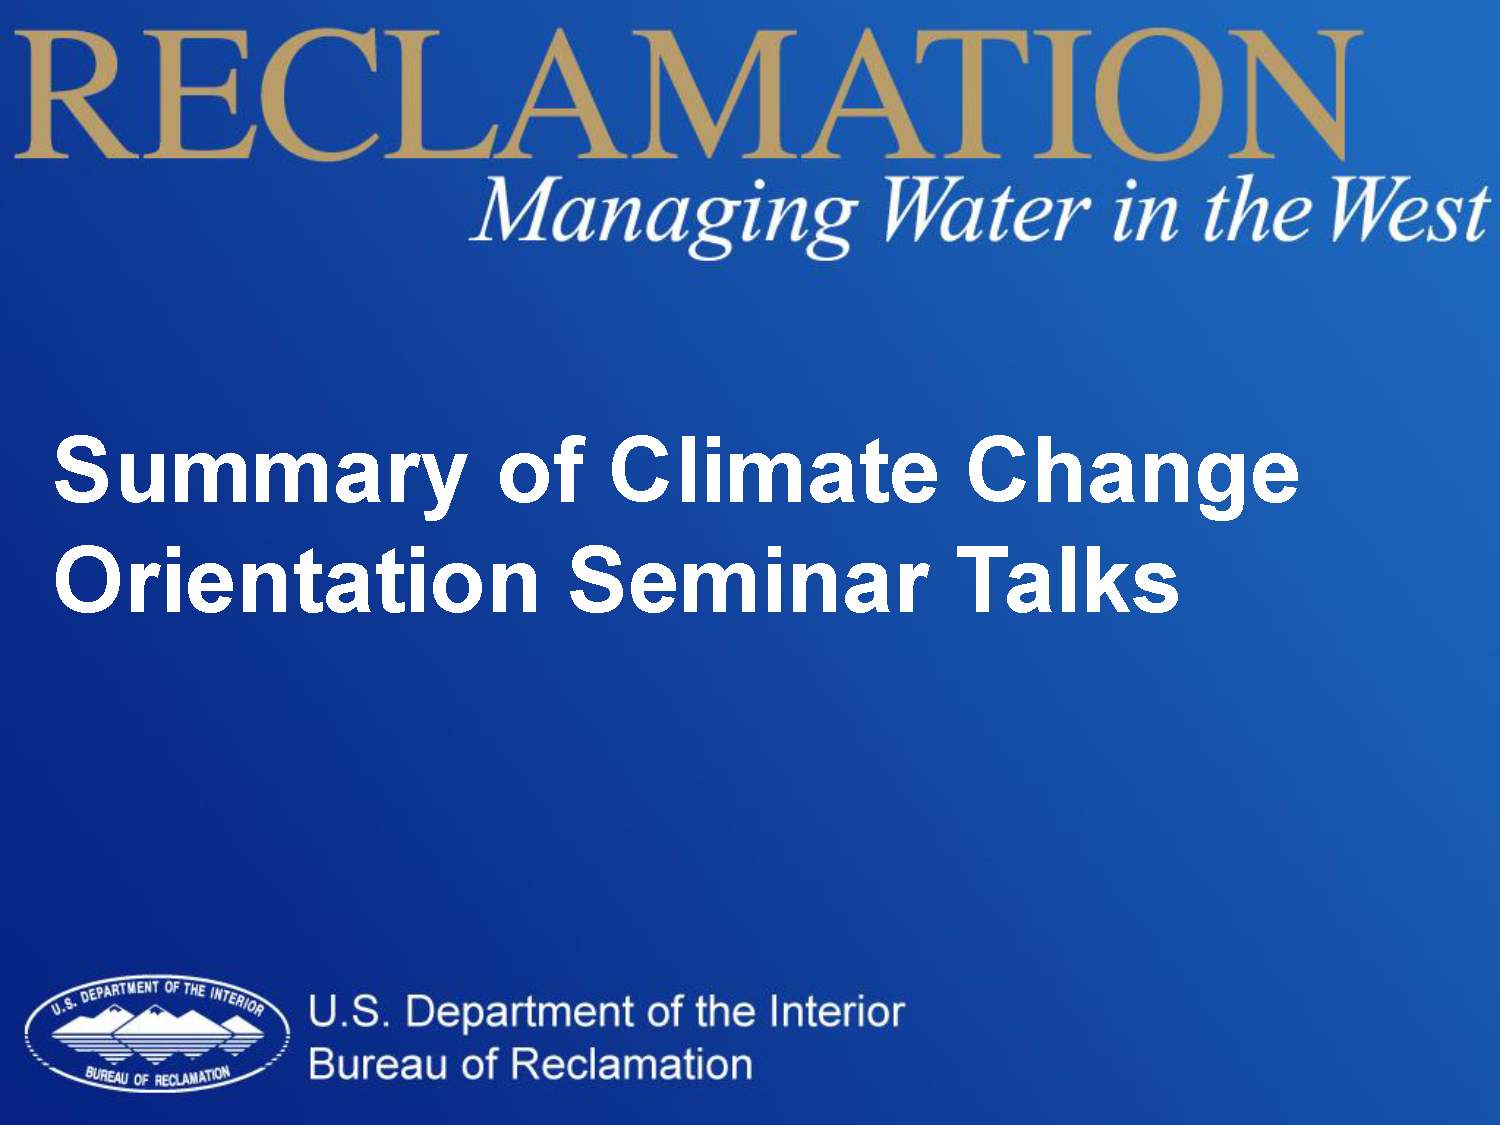 Climate Orientation Seminar presentation cover image.